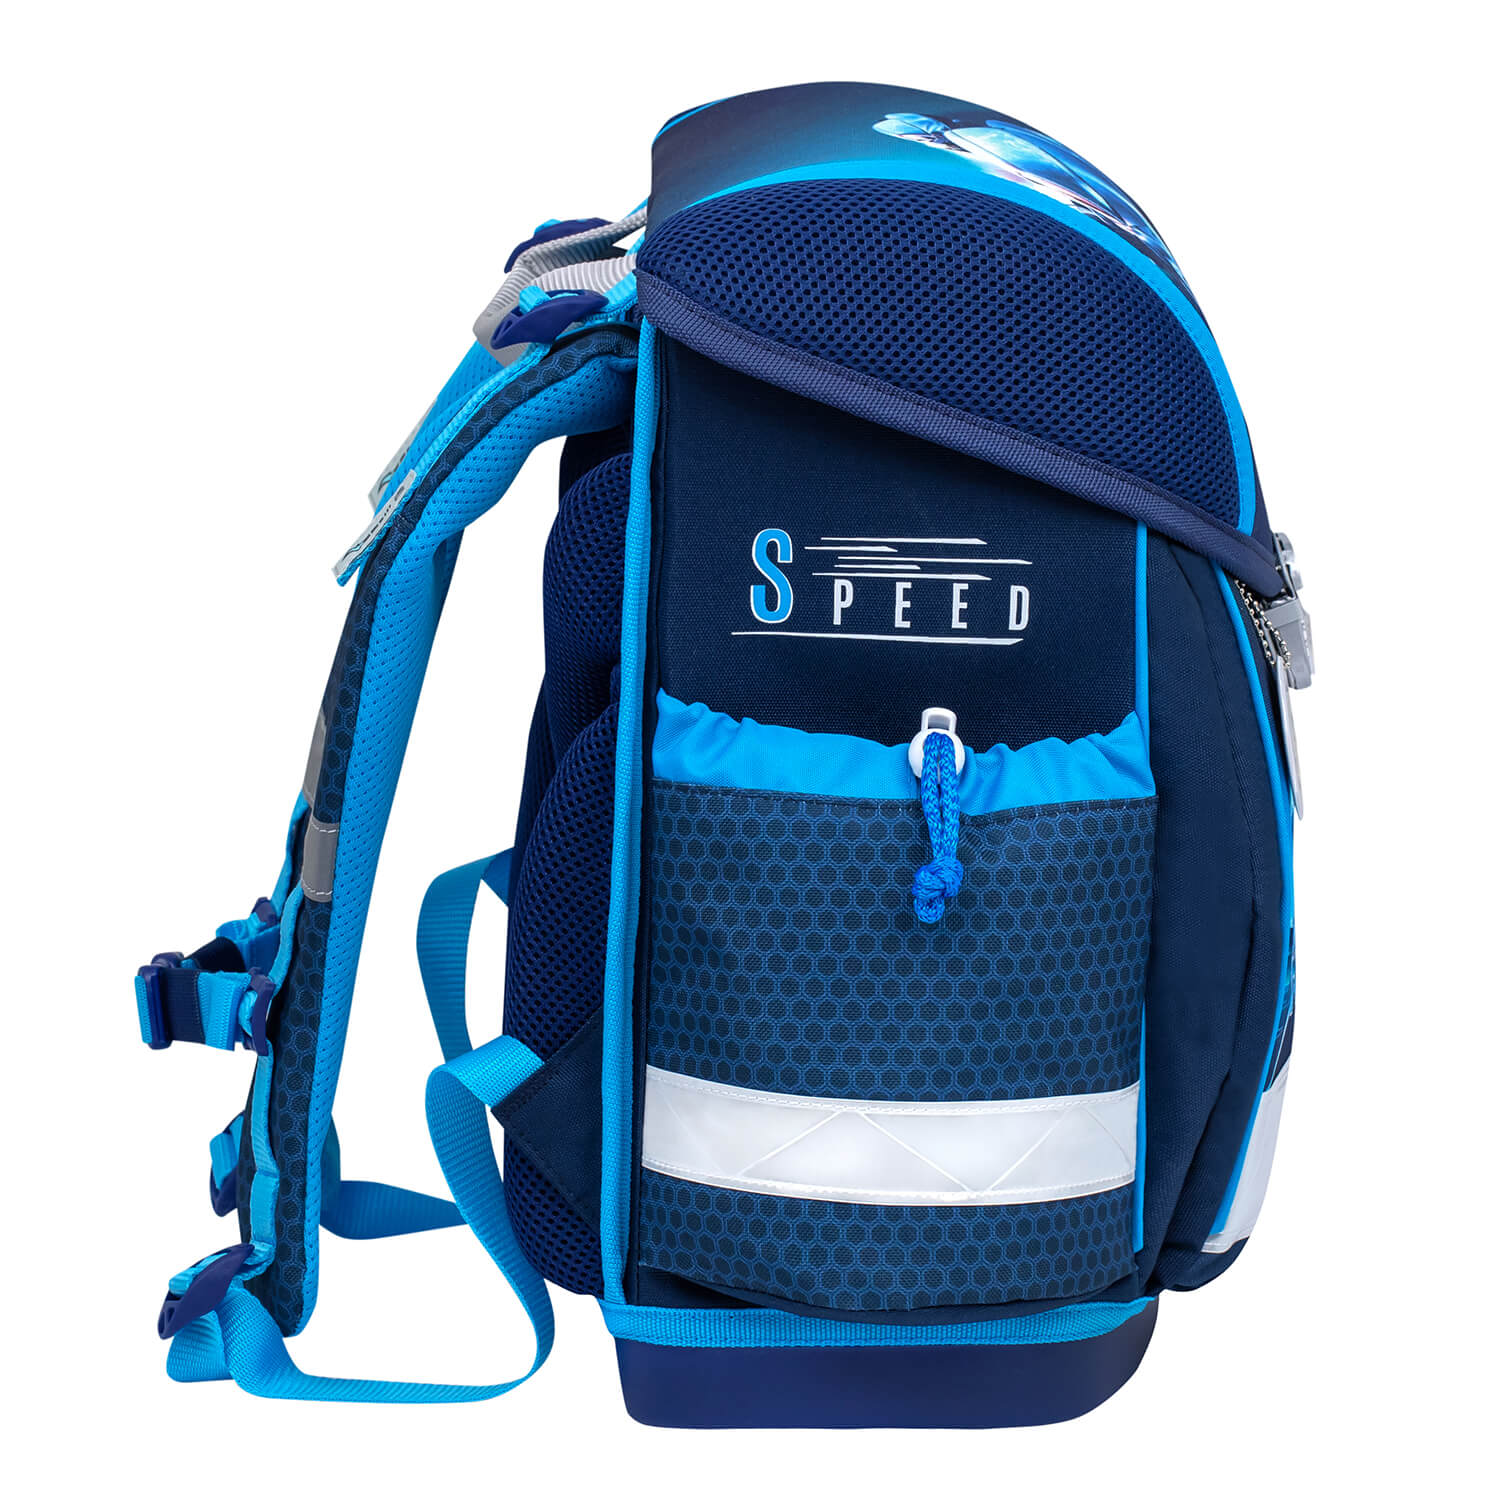 Classy Racing Blue Neon schoolbag set 4 pcs